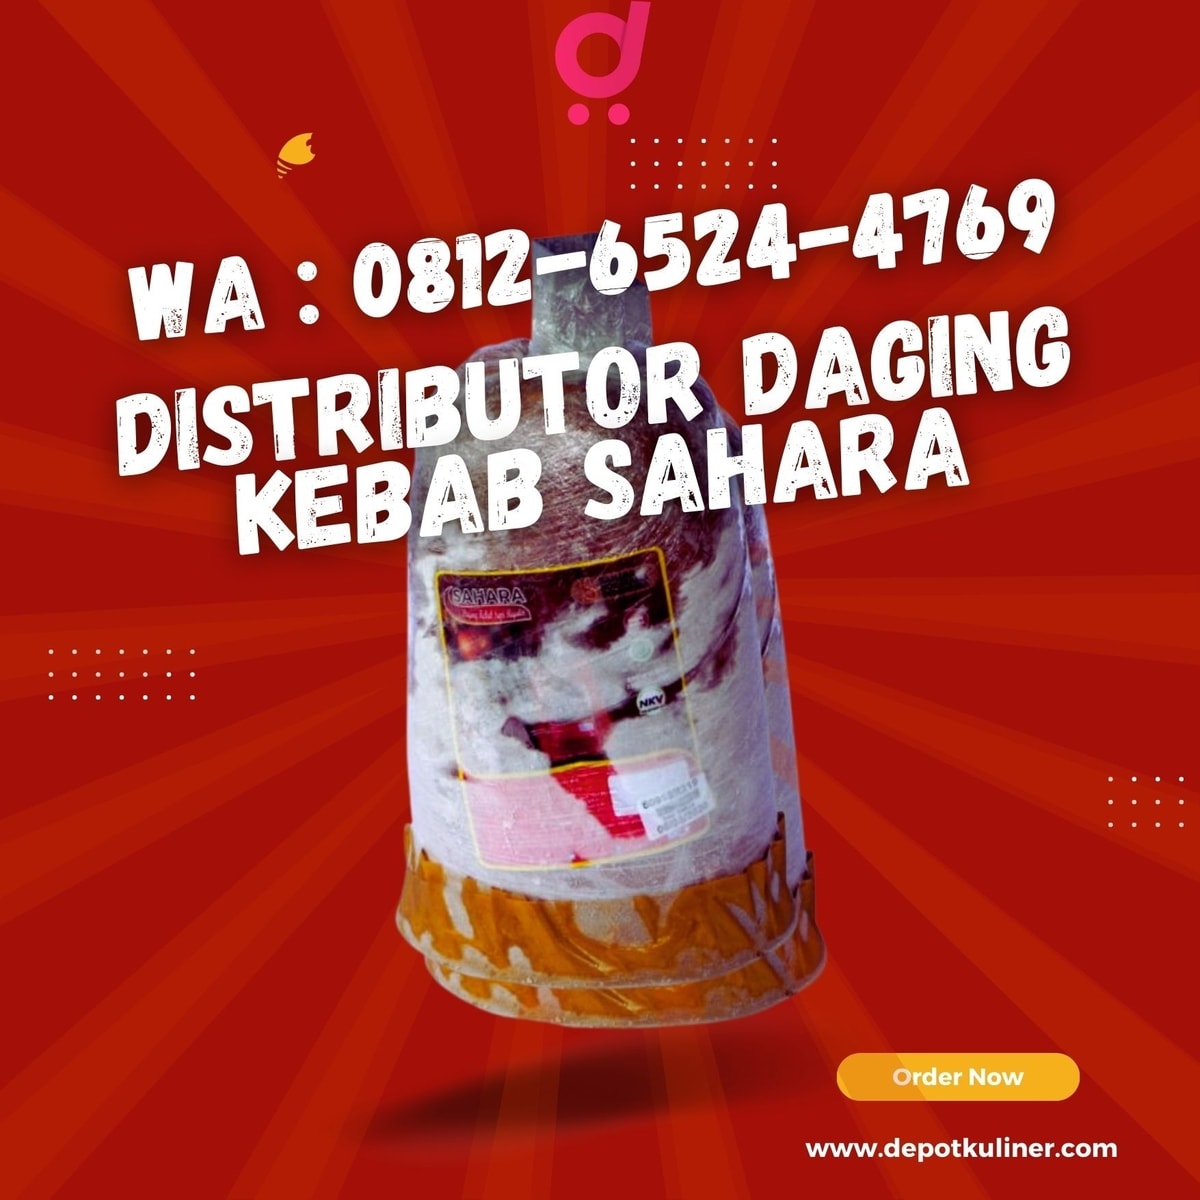 HARGA HEMAT, Call 0812-6524-4769, Distributor Daging Kebab Sahara